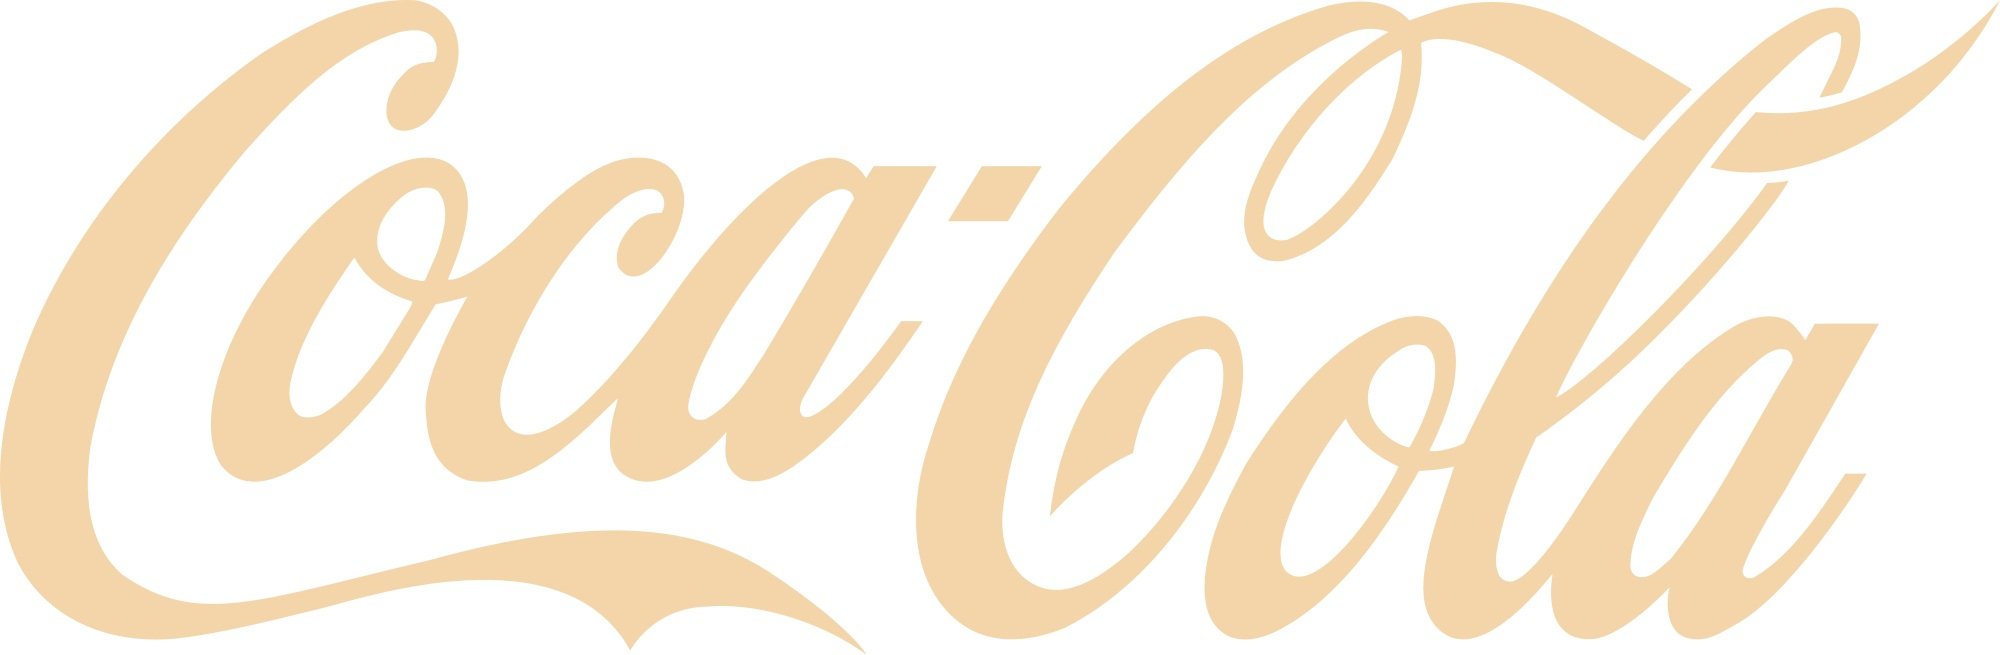 Coca+Cola.jpg